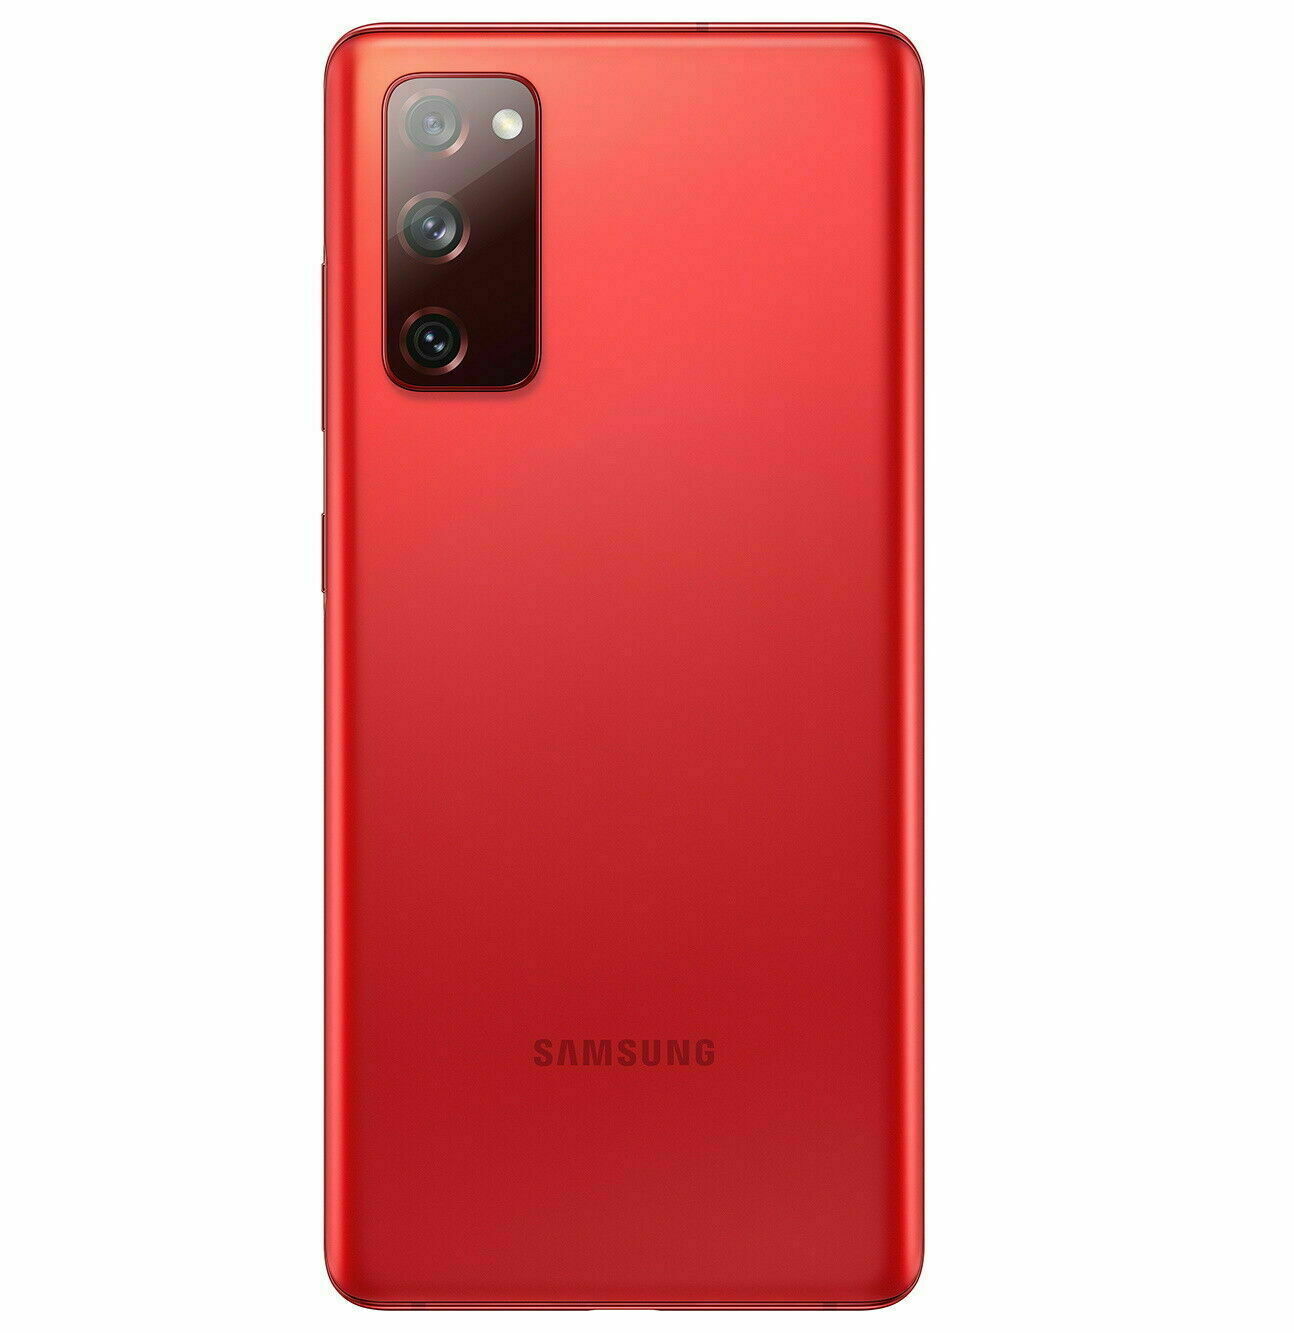 Like New Samsung Galaxy S21 Ultra 5G SM-G998U1 256GB Palestine